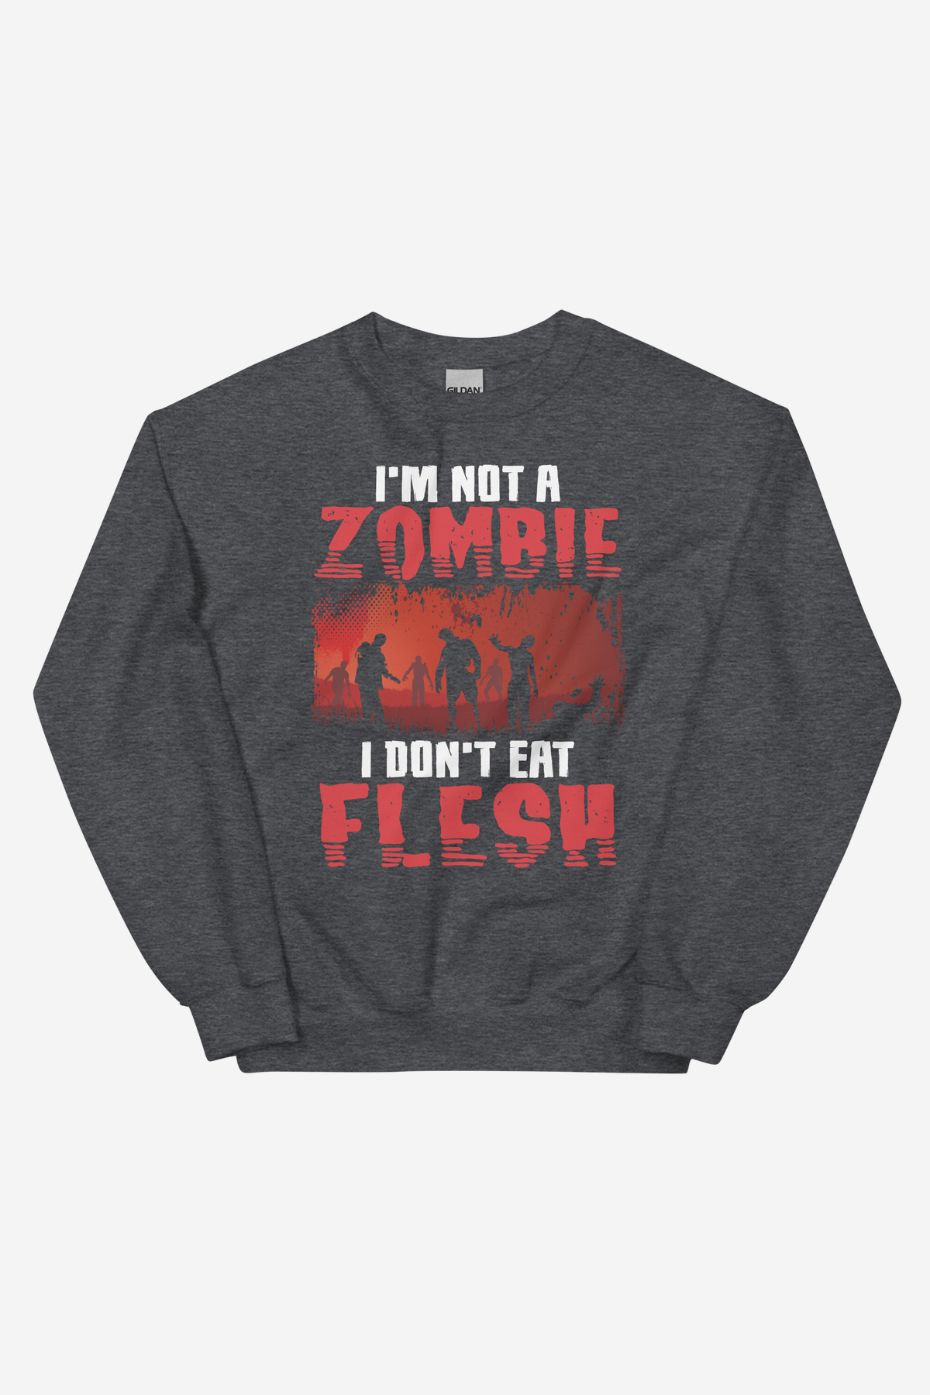 Not a Zombie - Unisex Sweatshirt